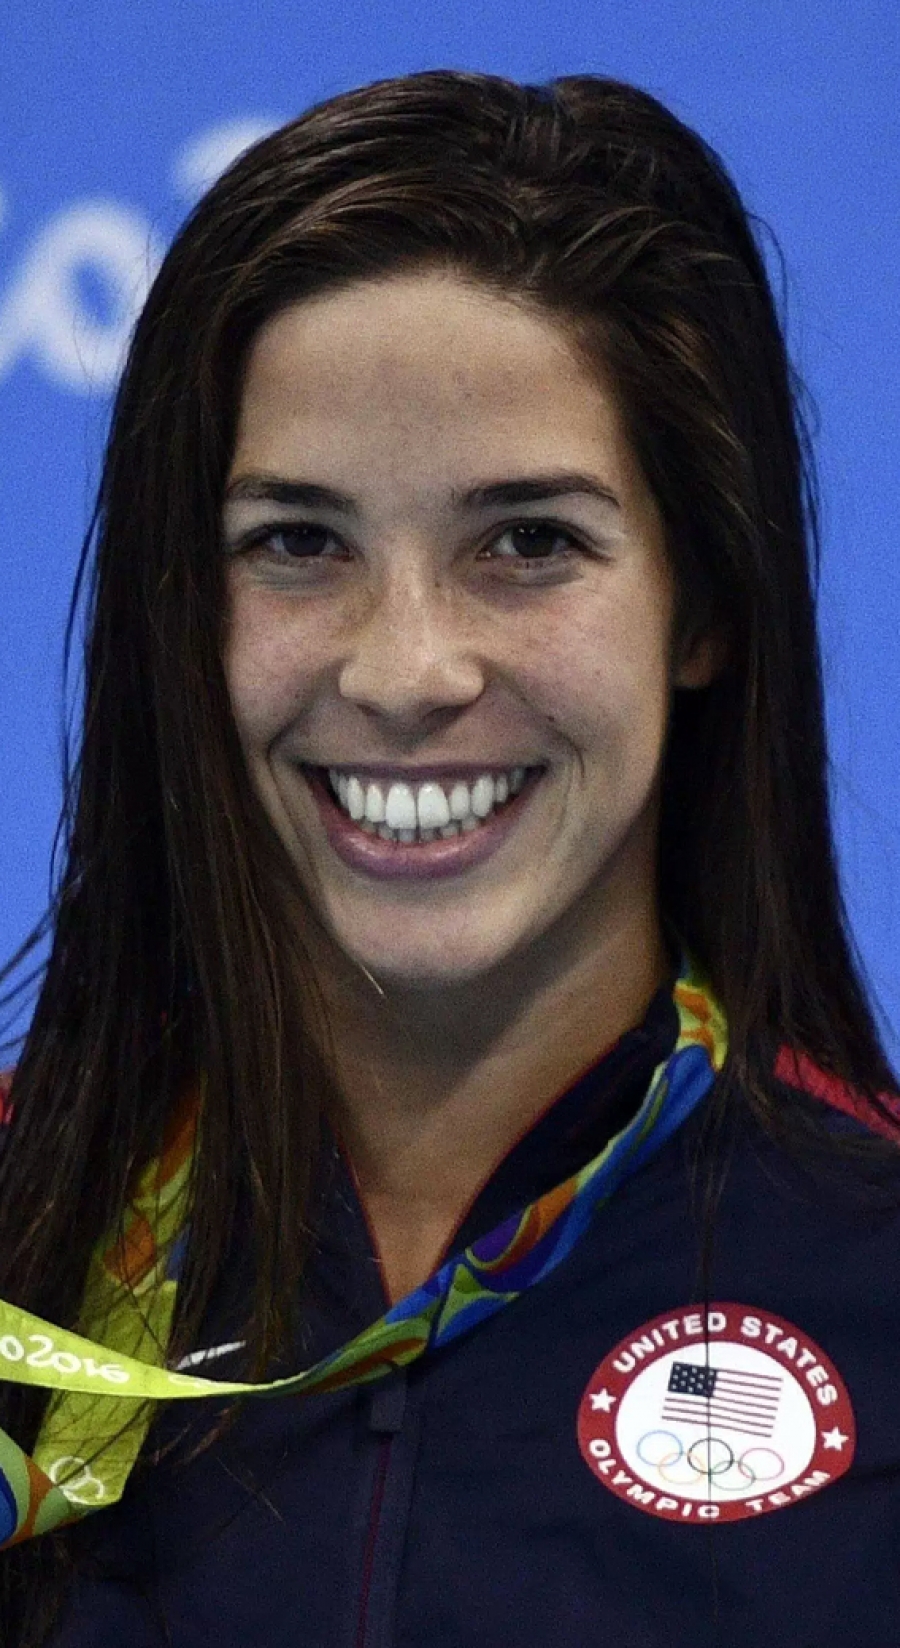 Olympic swimmer lives her faith